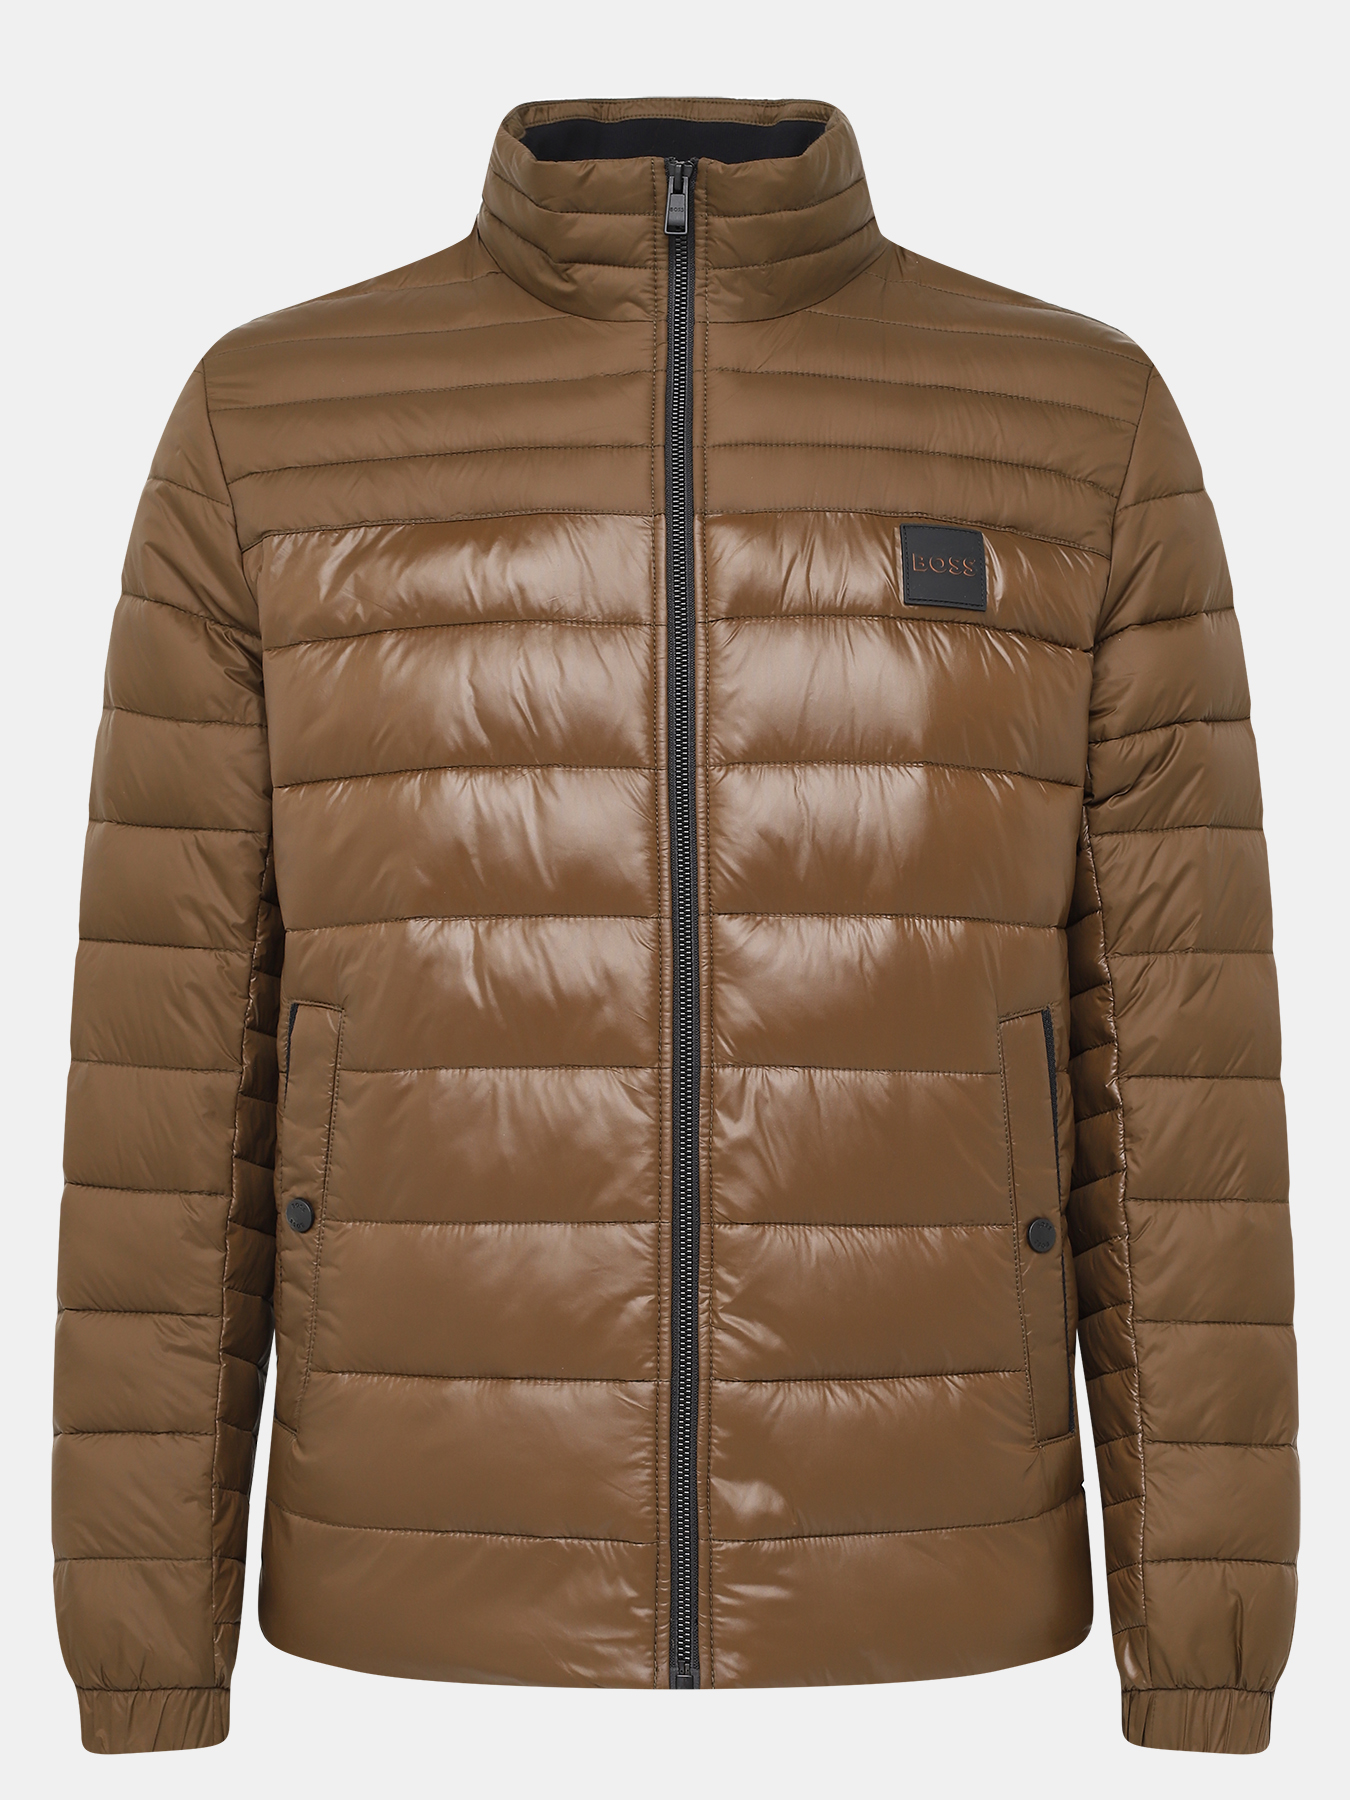 Куртка Oden BOSS 420445-026, цвет хаки, размер 50